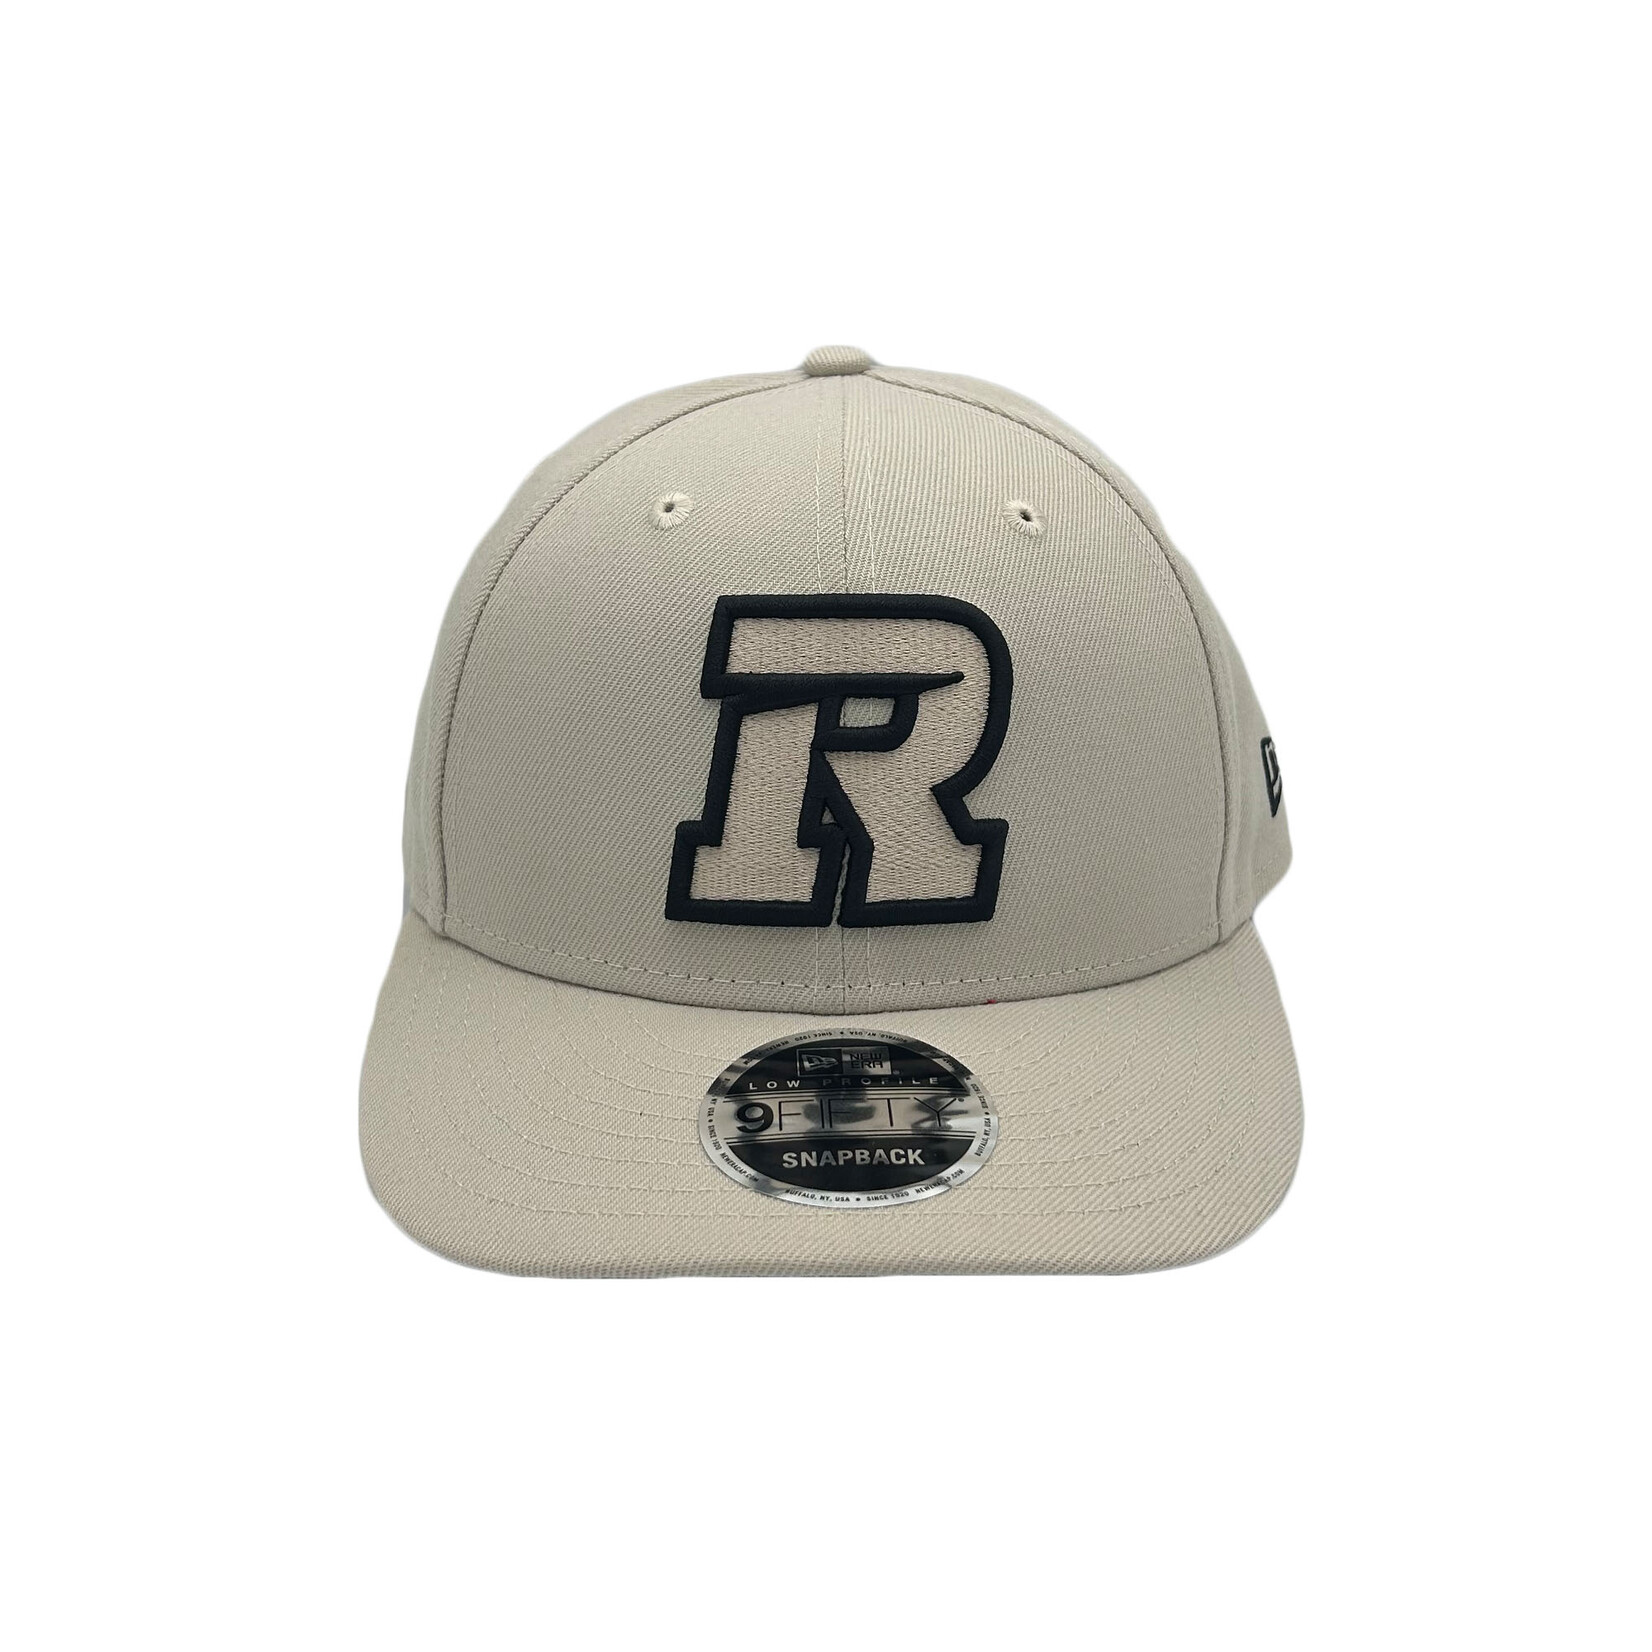 REDBLACKS REDBLACKS Behind the R  Stone 950 Hat